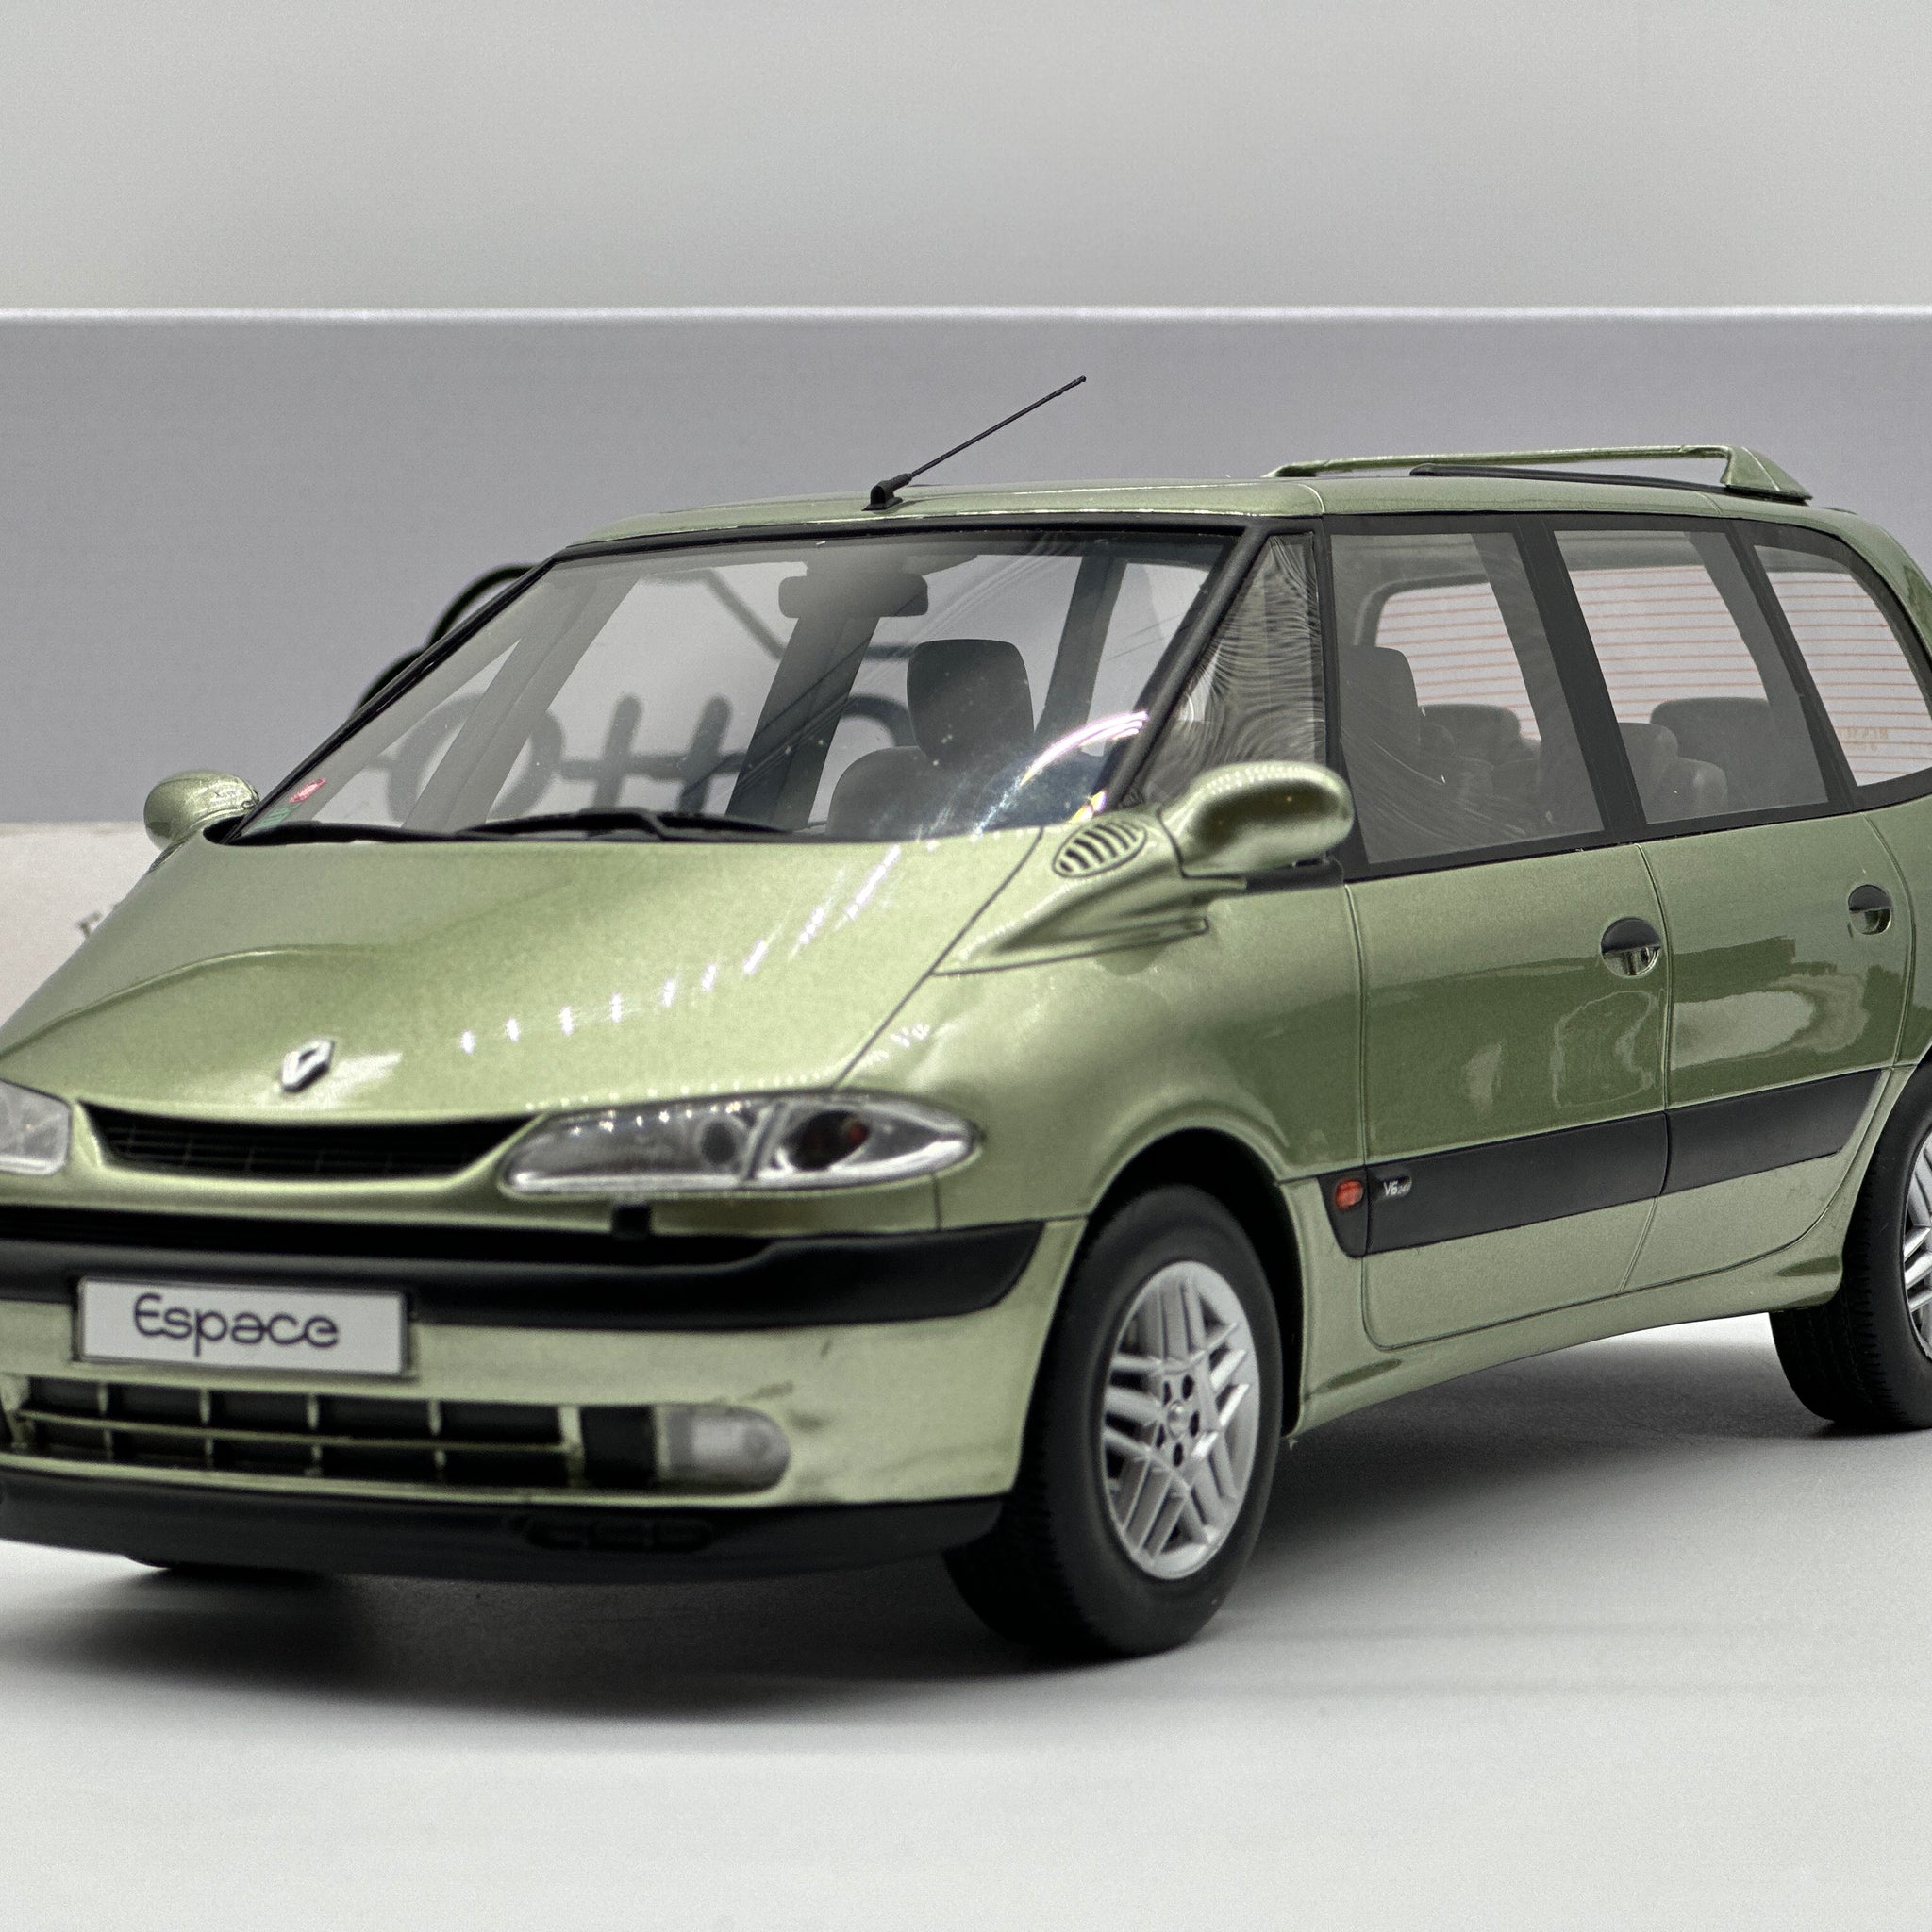 Renault Espace 3 Green 2001